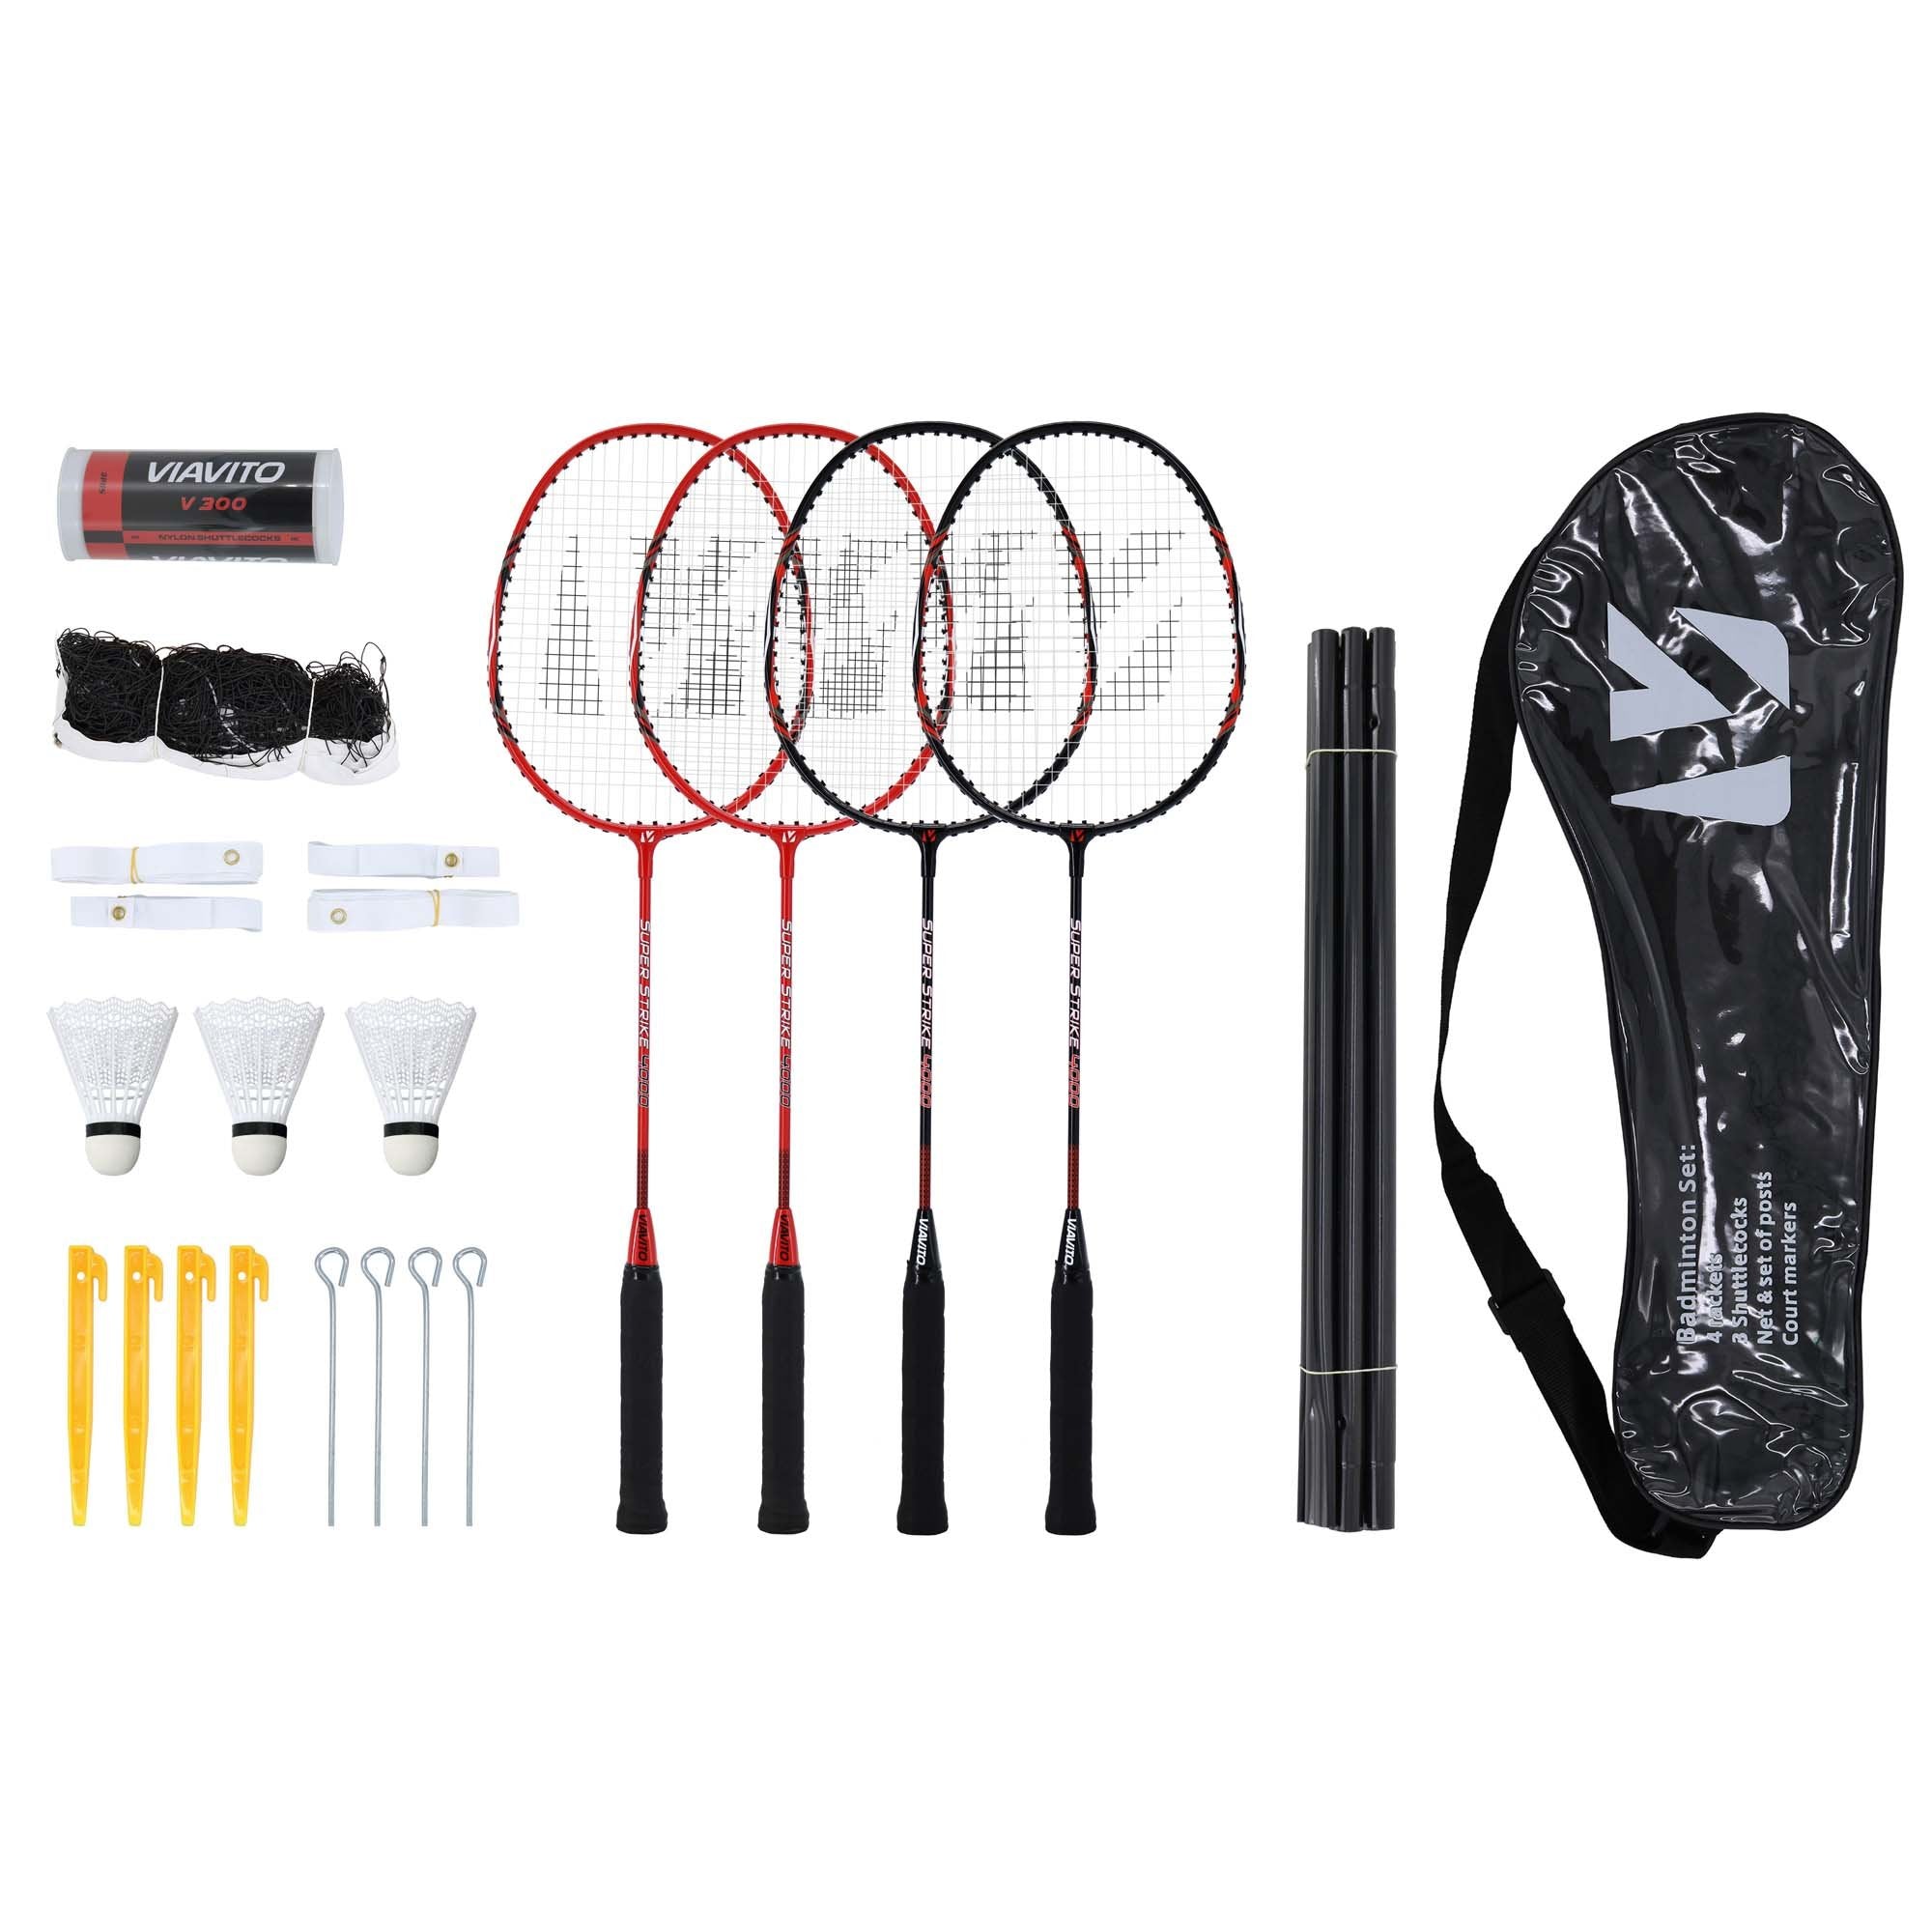 Viavito Super Strike 4 Player Badminton Set